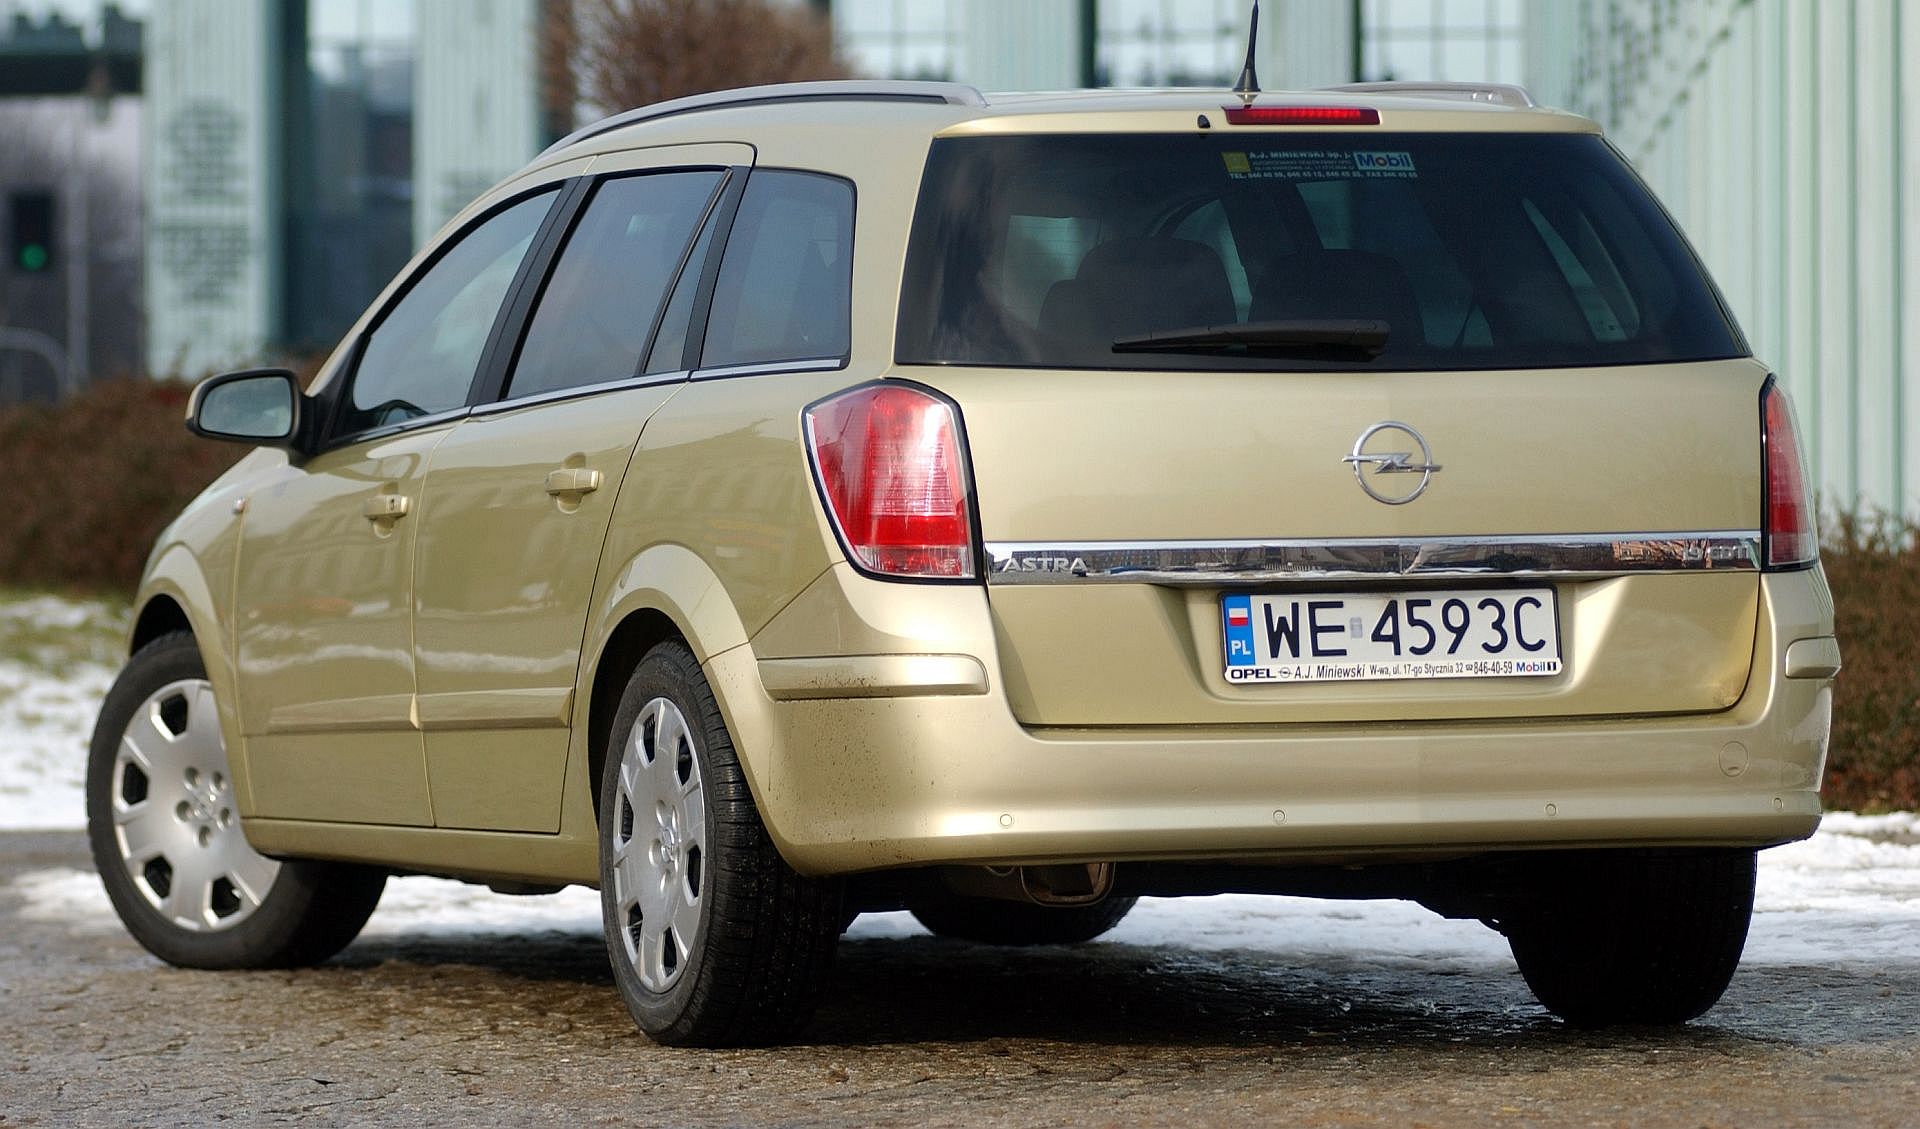 Opel Astra H GTC - silniki, dane, testy •